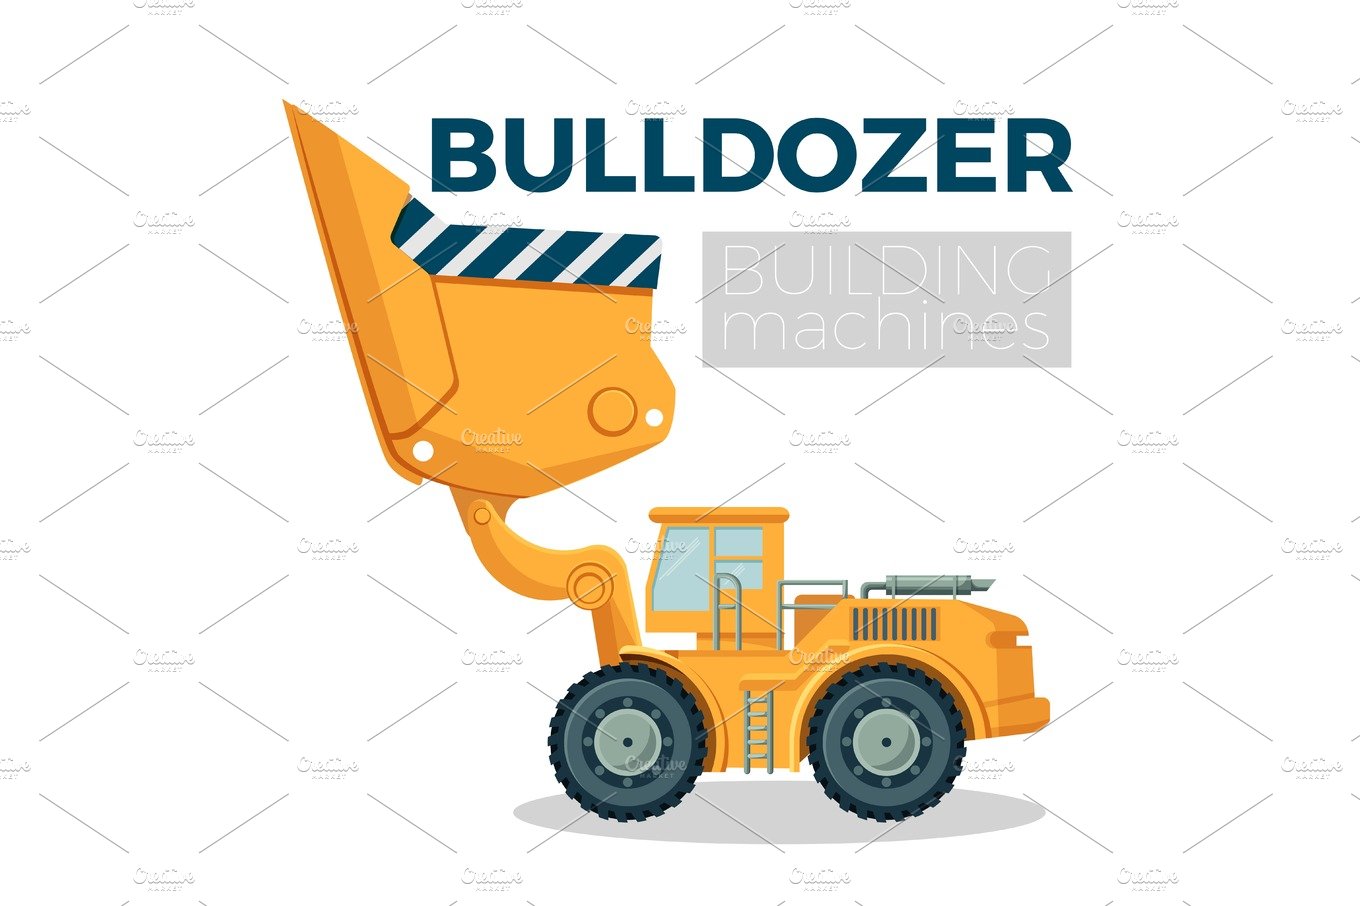 Bulldozer building machine realistic logo design on white. Crawler tractor cover image.